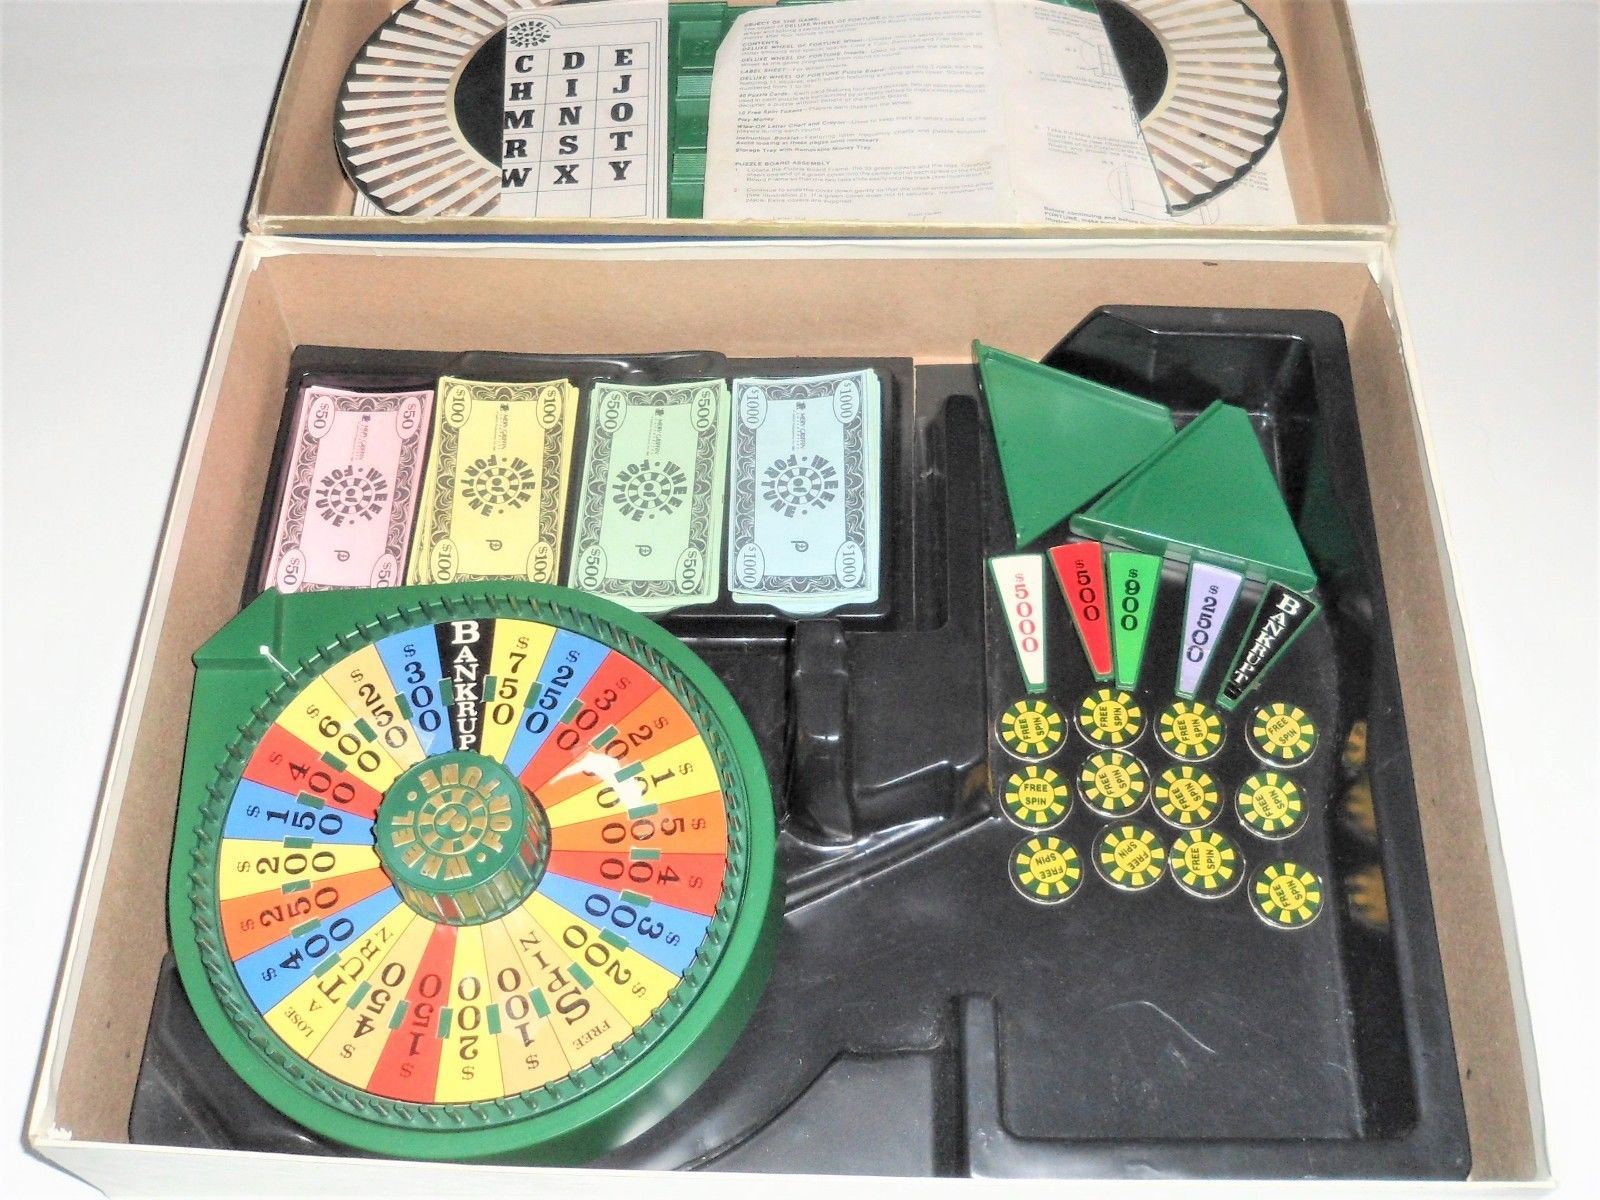 wheel of fortune board game amazon